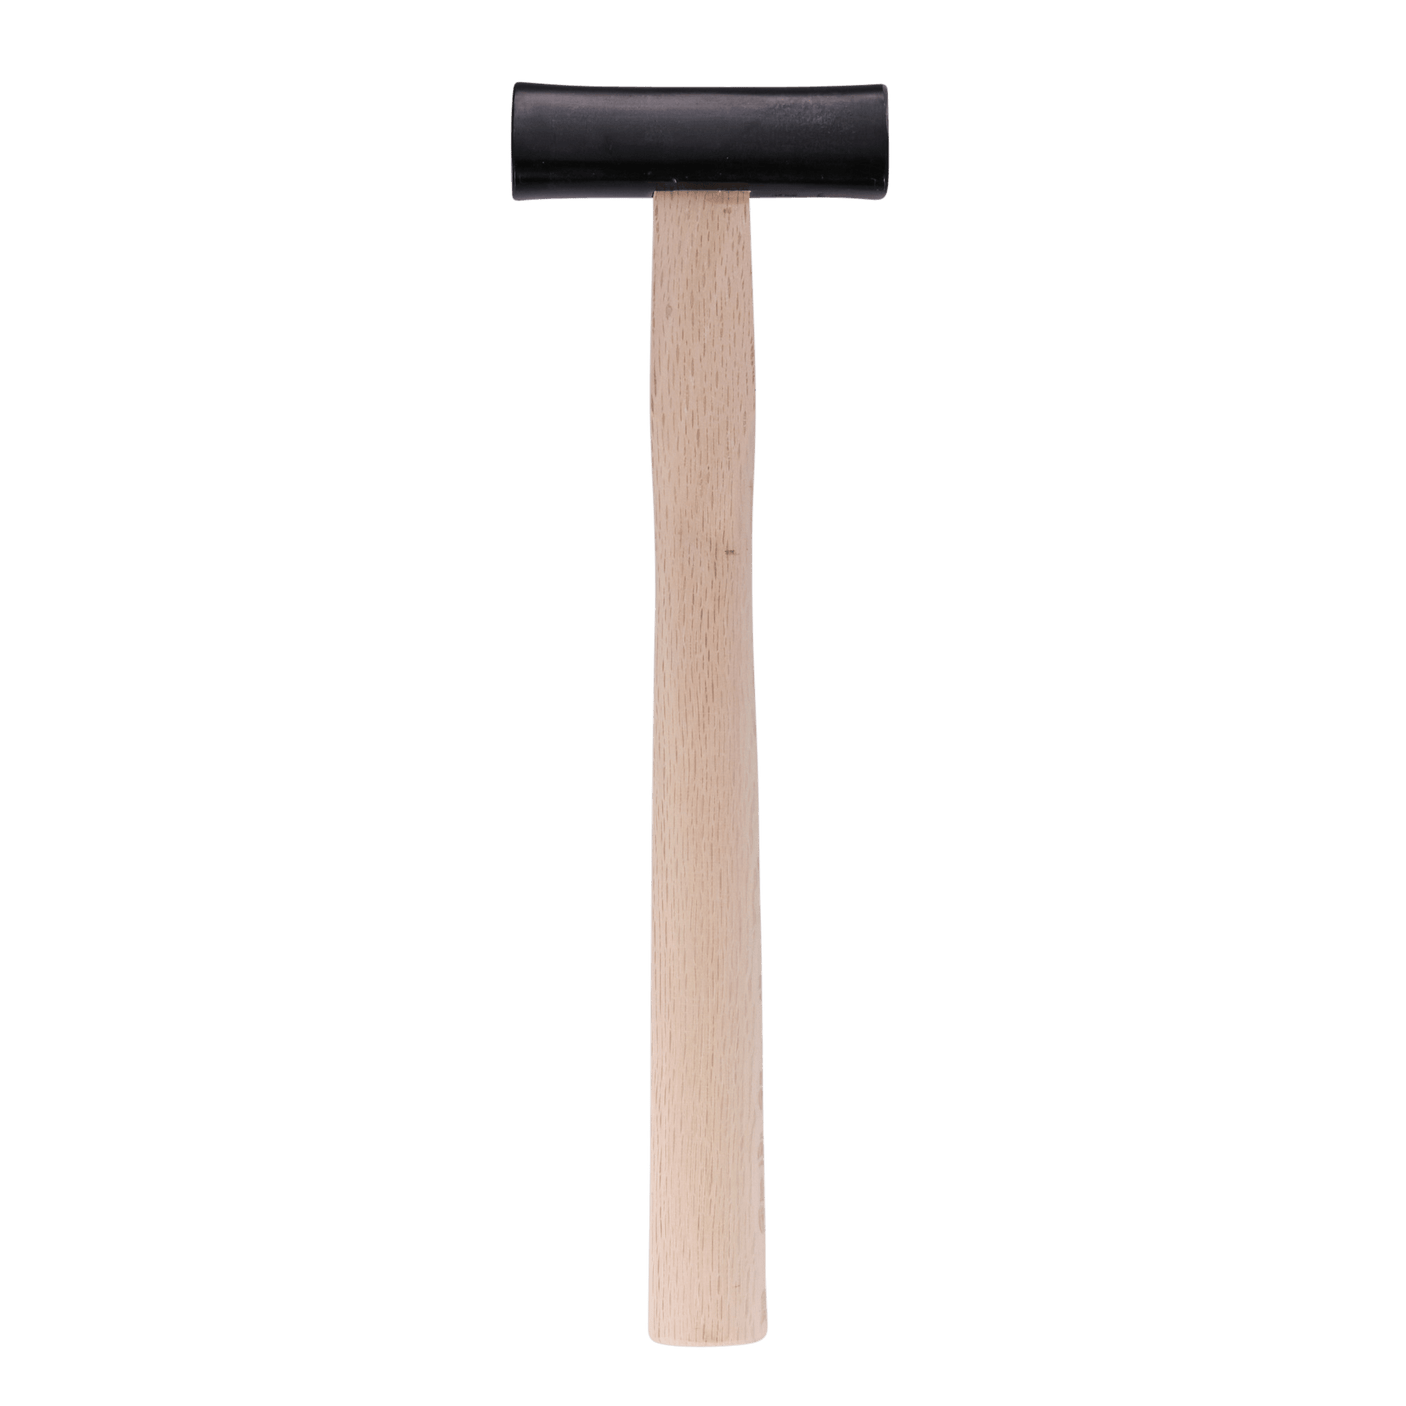 Tenryu Genno - Black Finish - 675g - Hammers - Japanese Tools Australia